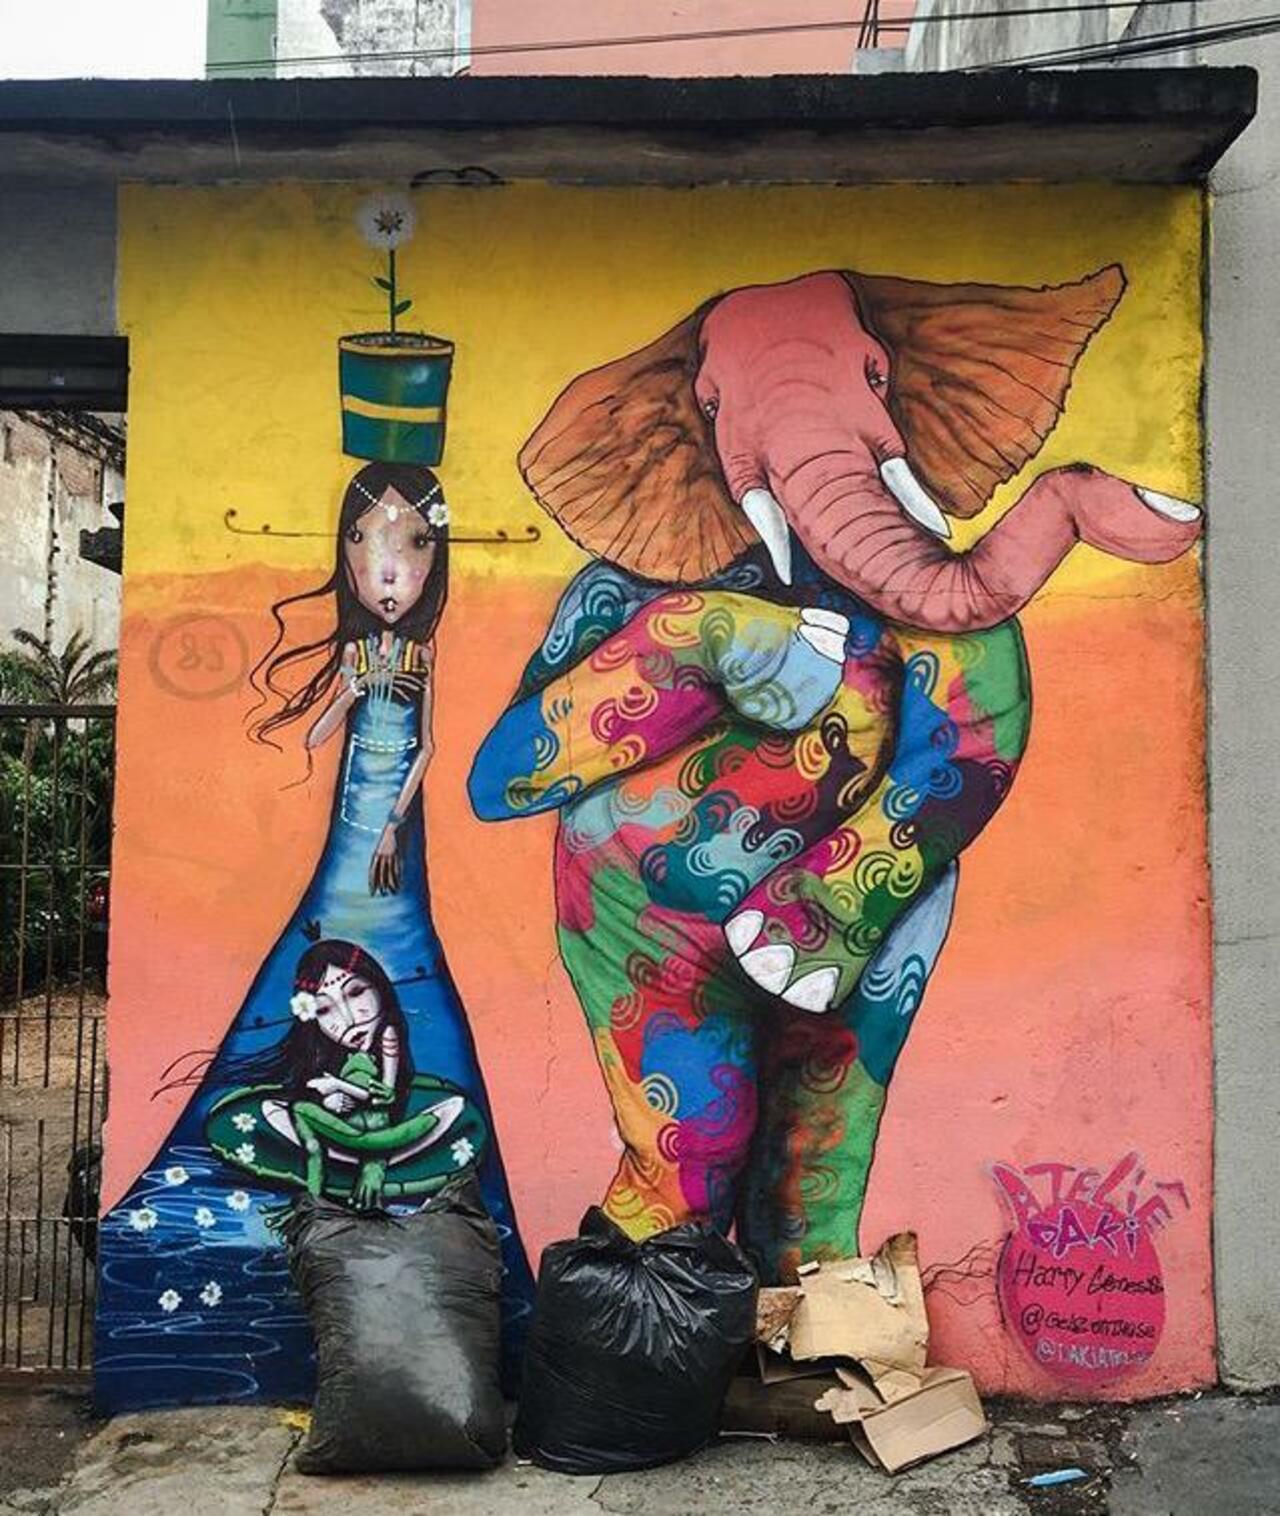 Street Art by Harry Geneis & Gelson in São Paulo 

#art #mural #graffiti #streetart http://t.co/T6oBVdrYTx